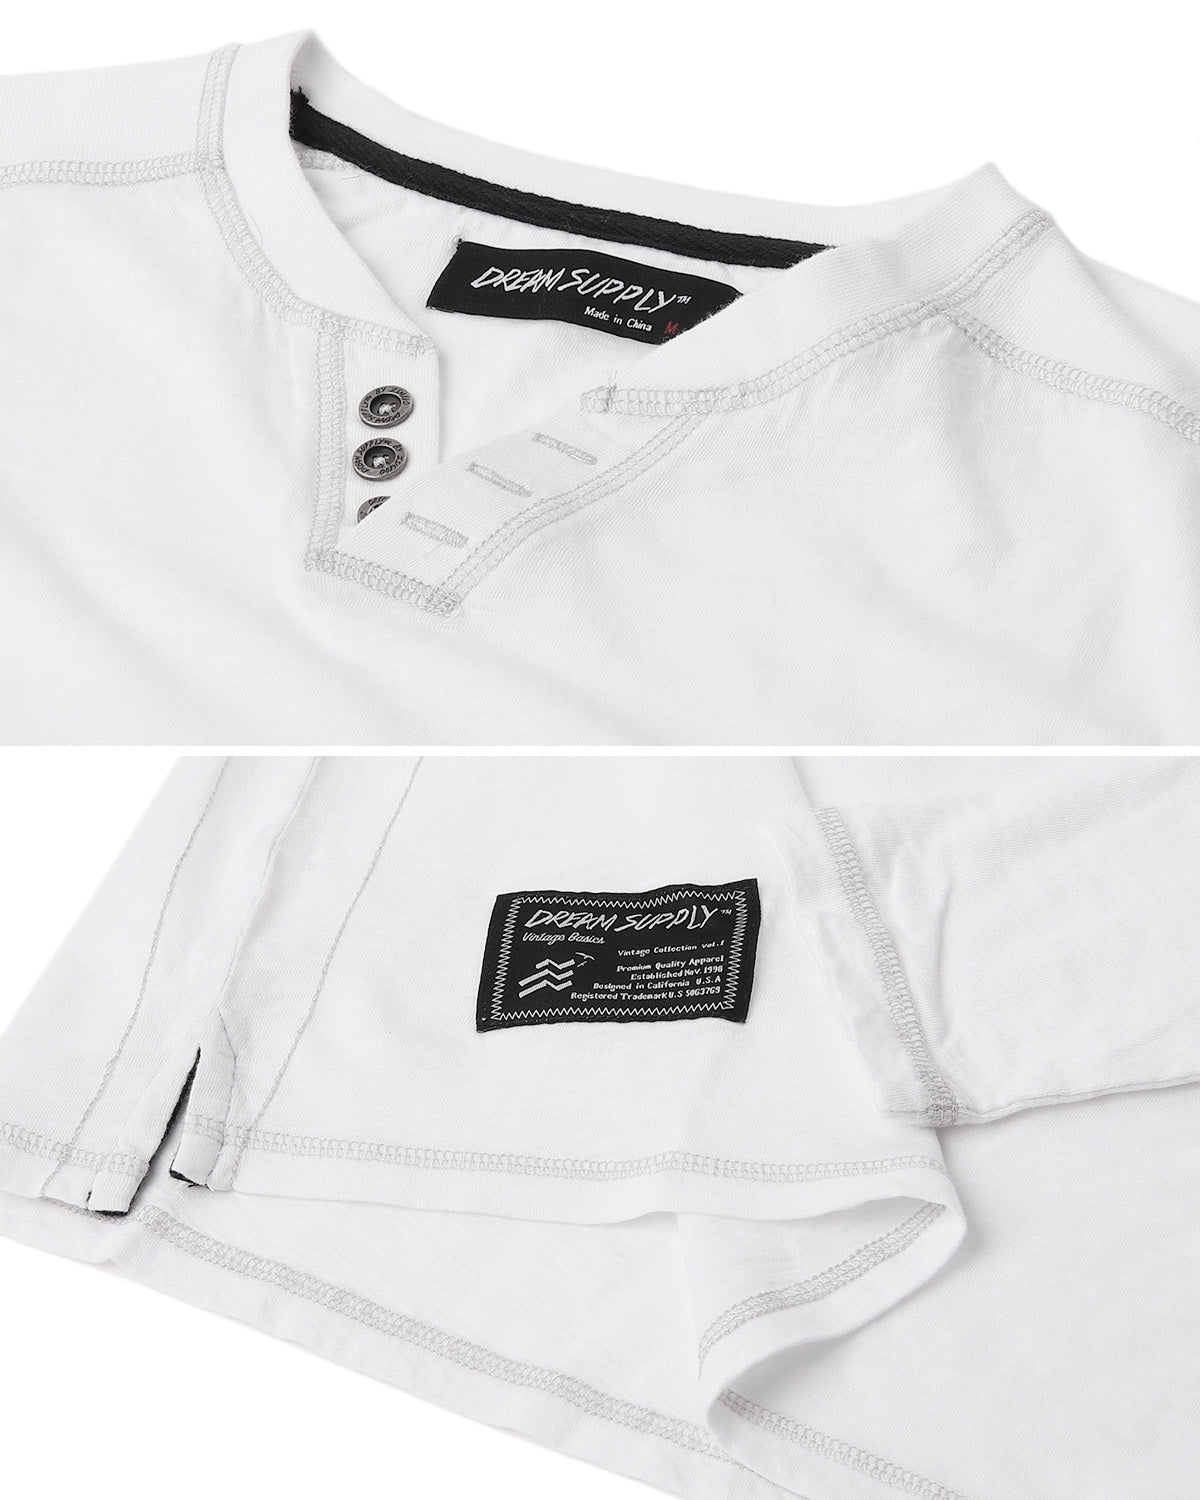 Men's Long Sleeve V-Neck Henley Oil Wash Contrast Seam Vintage Shirt - Silver Grey